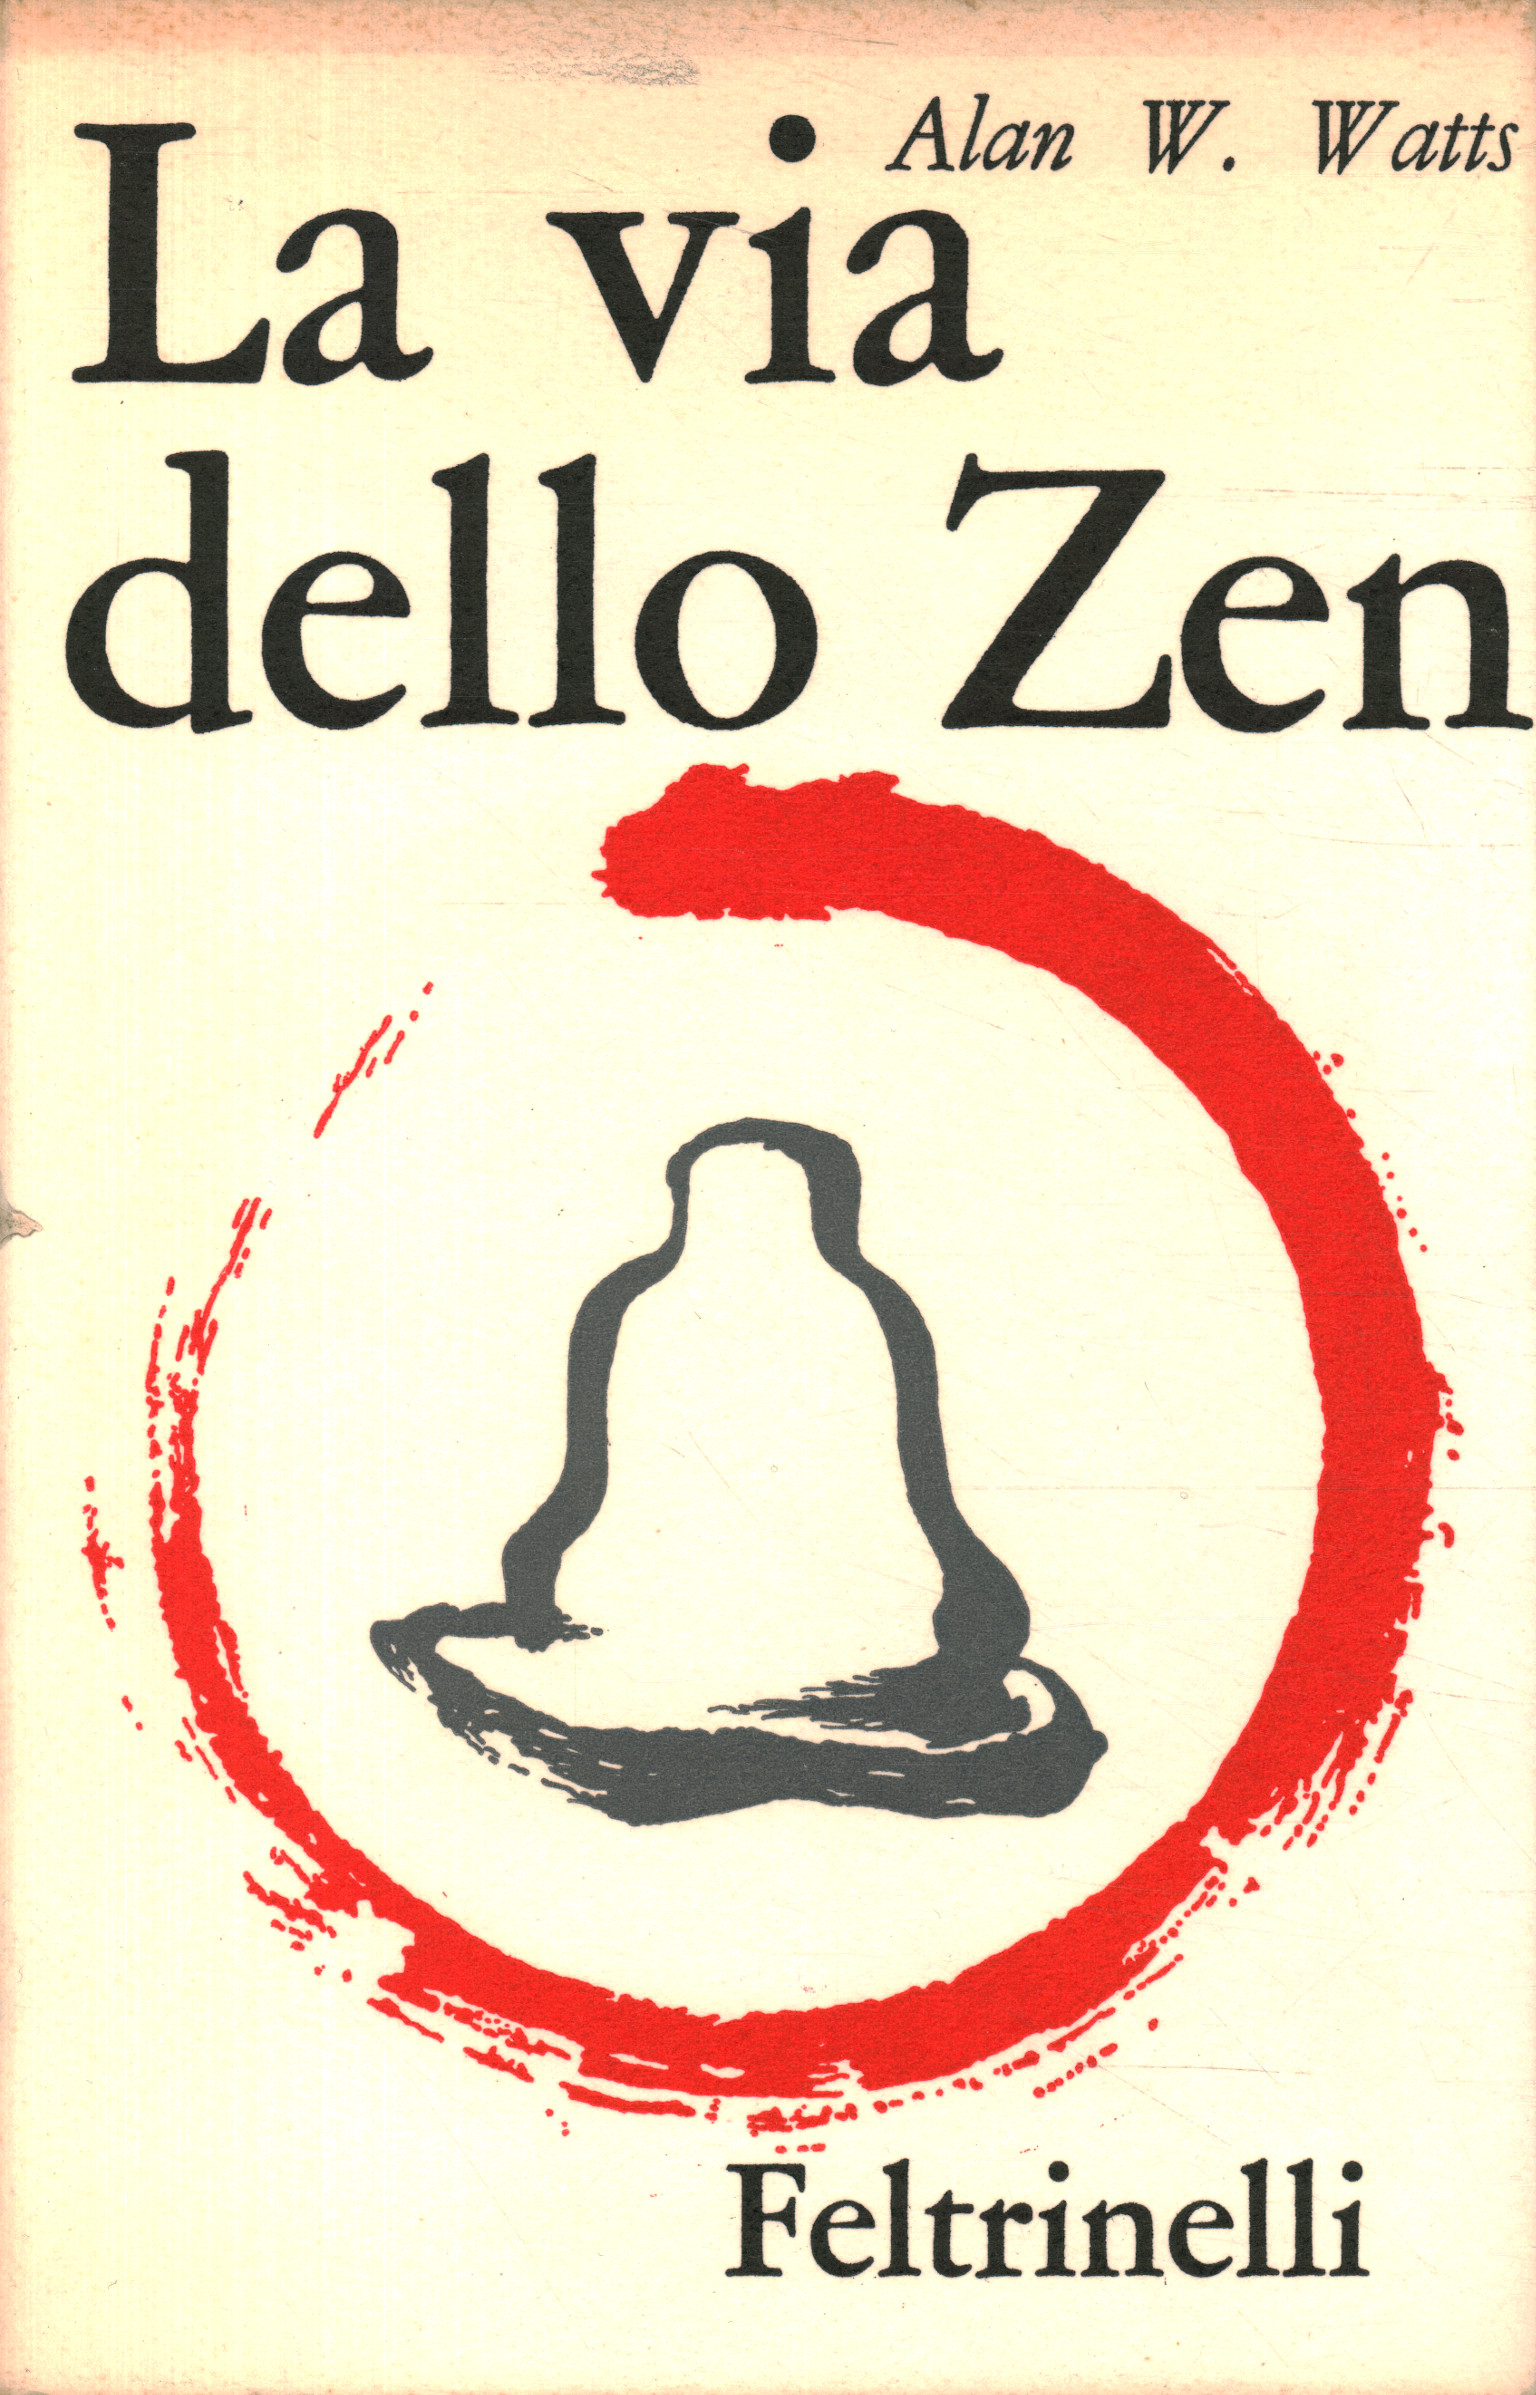 El camino del zen